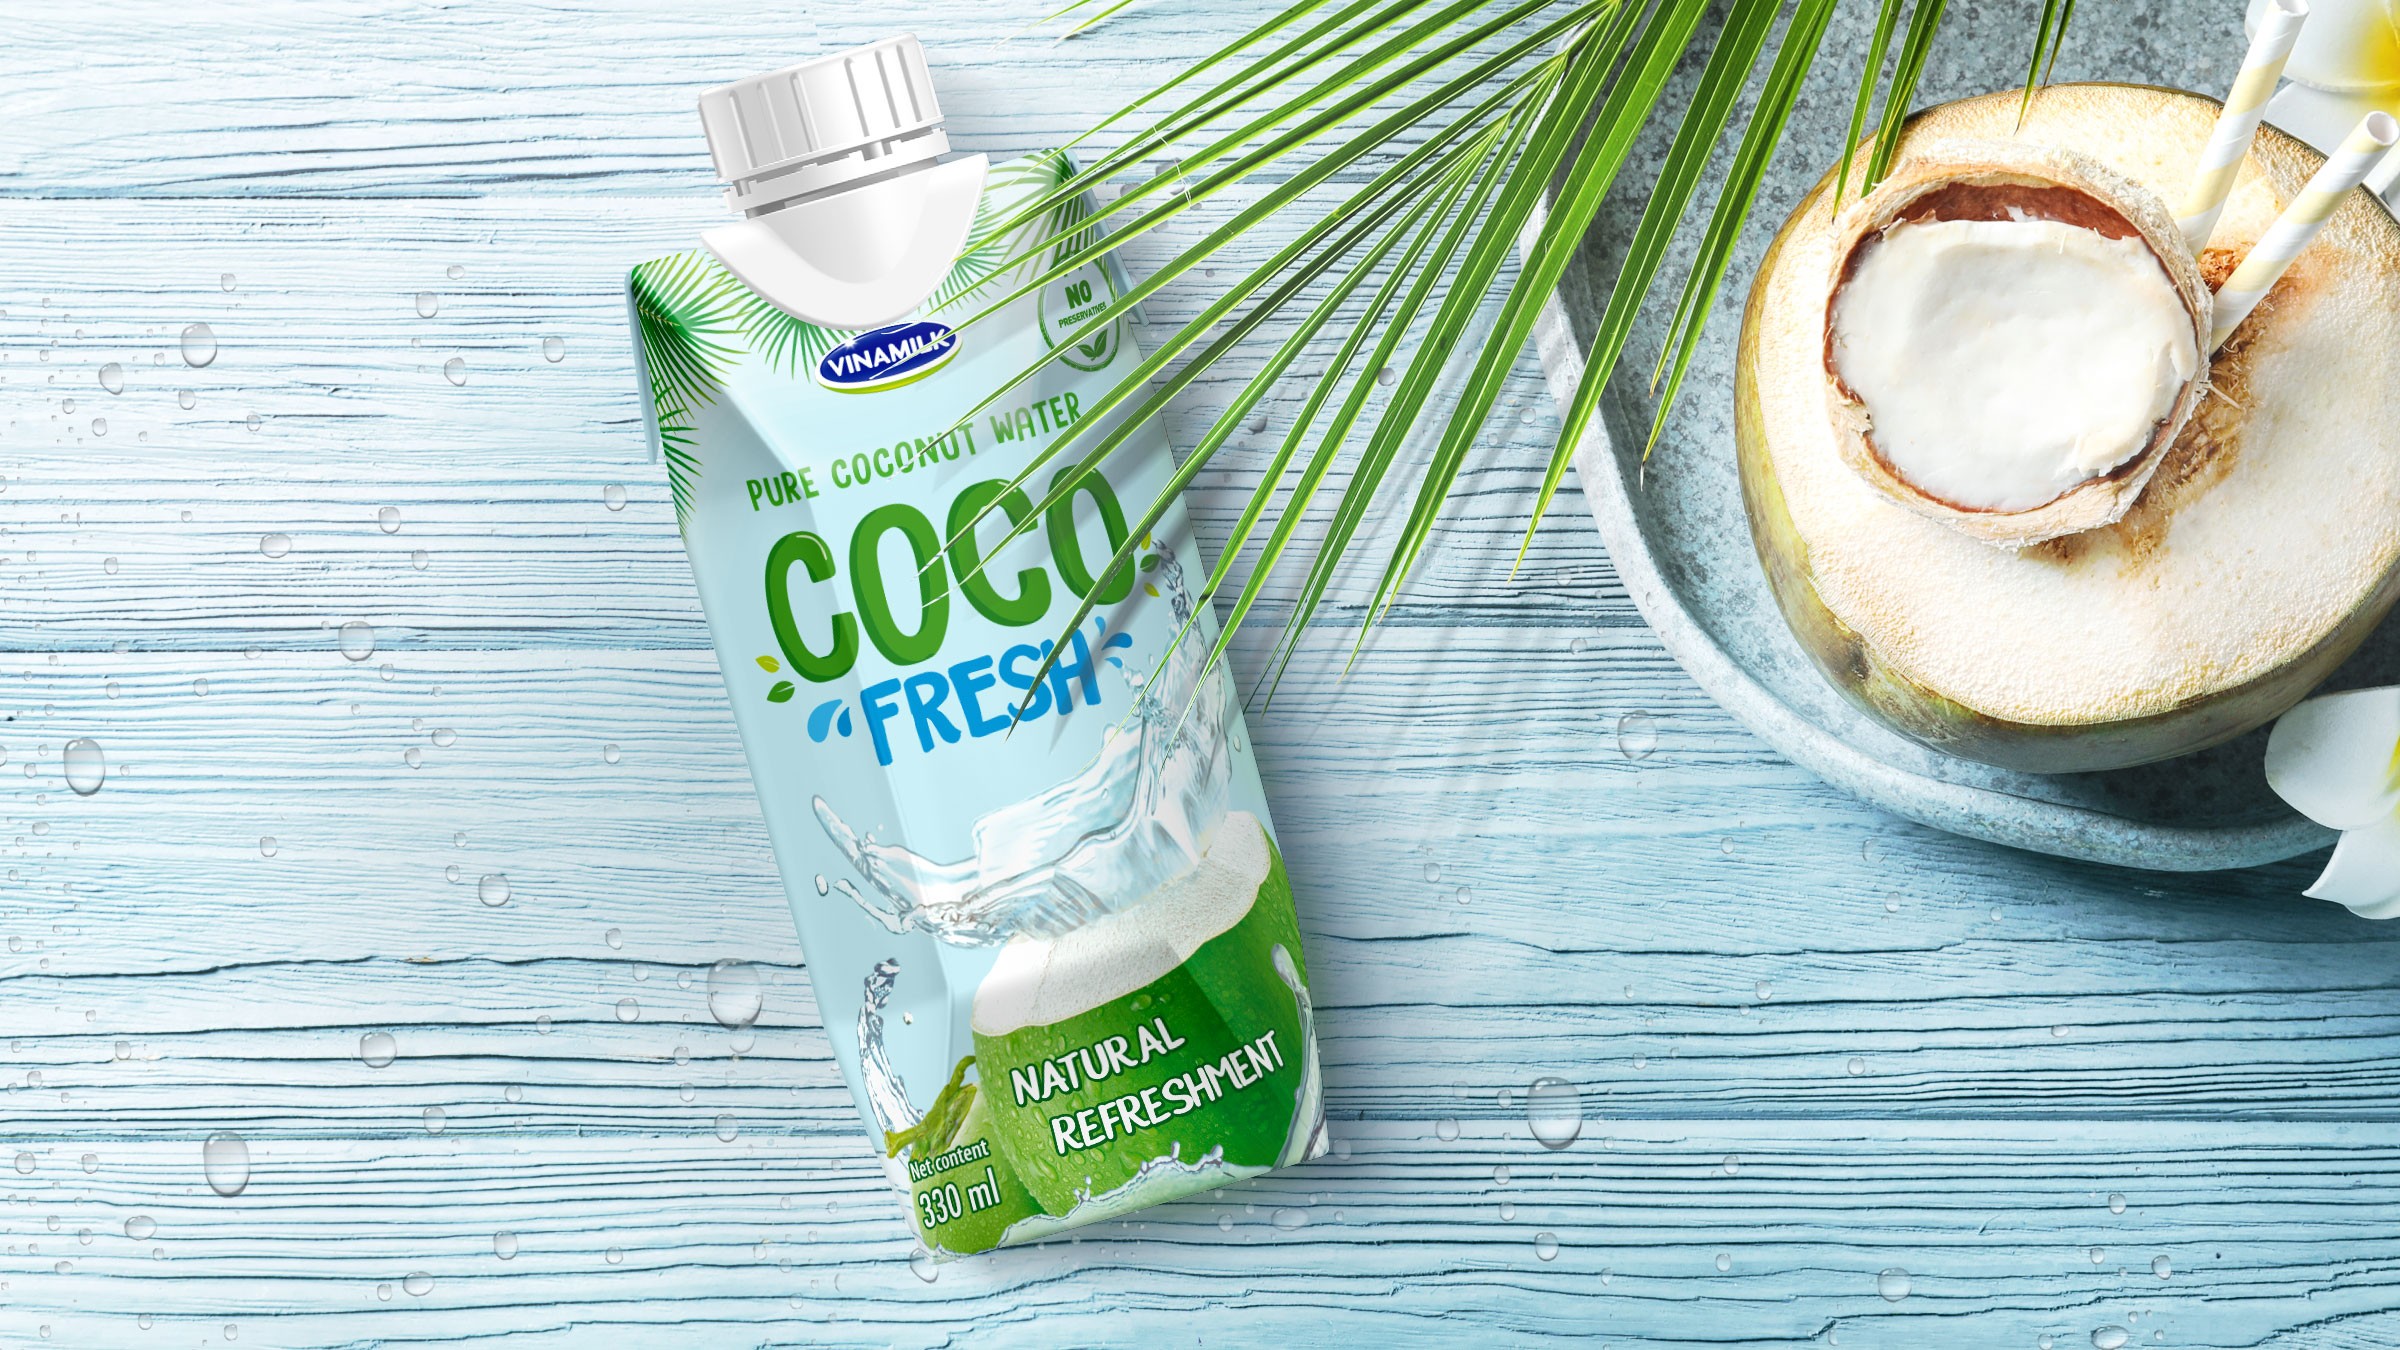 Coconut Water Packaging Design The Circle Branding Partners #circlebranding